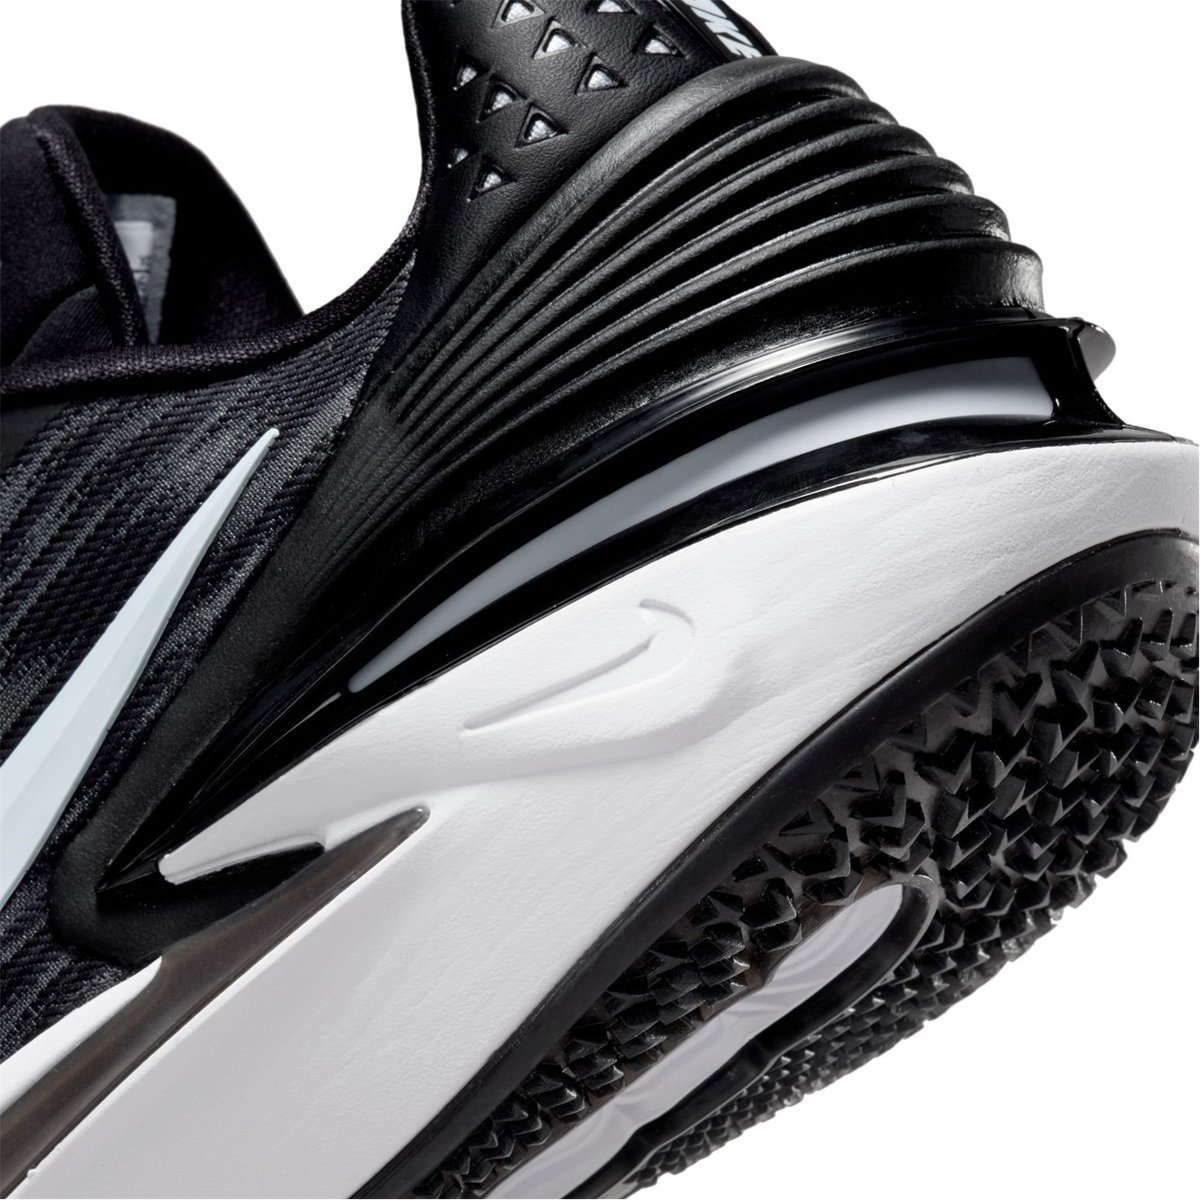 Nike Air Zoom G.T. Cut 2 Basketball Shoes Black/White, £125.00